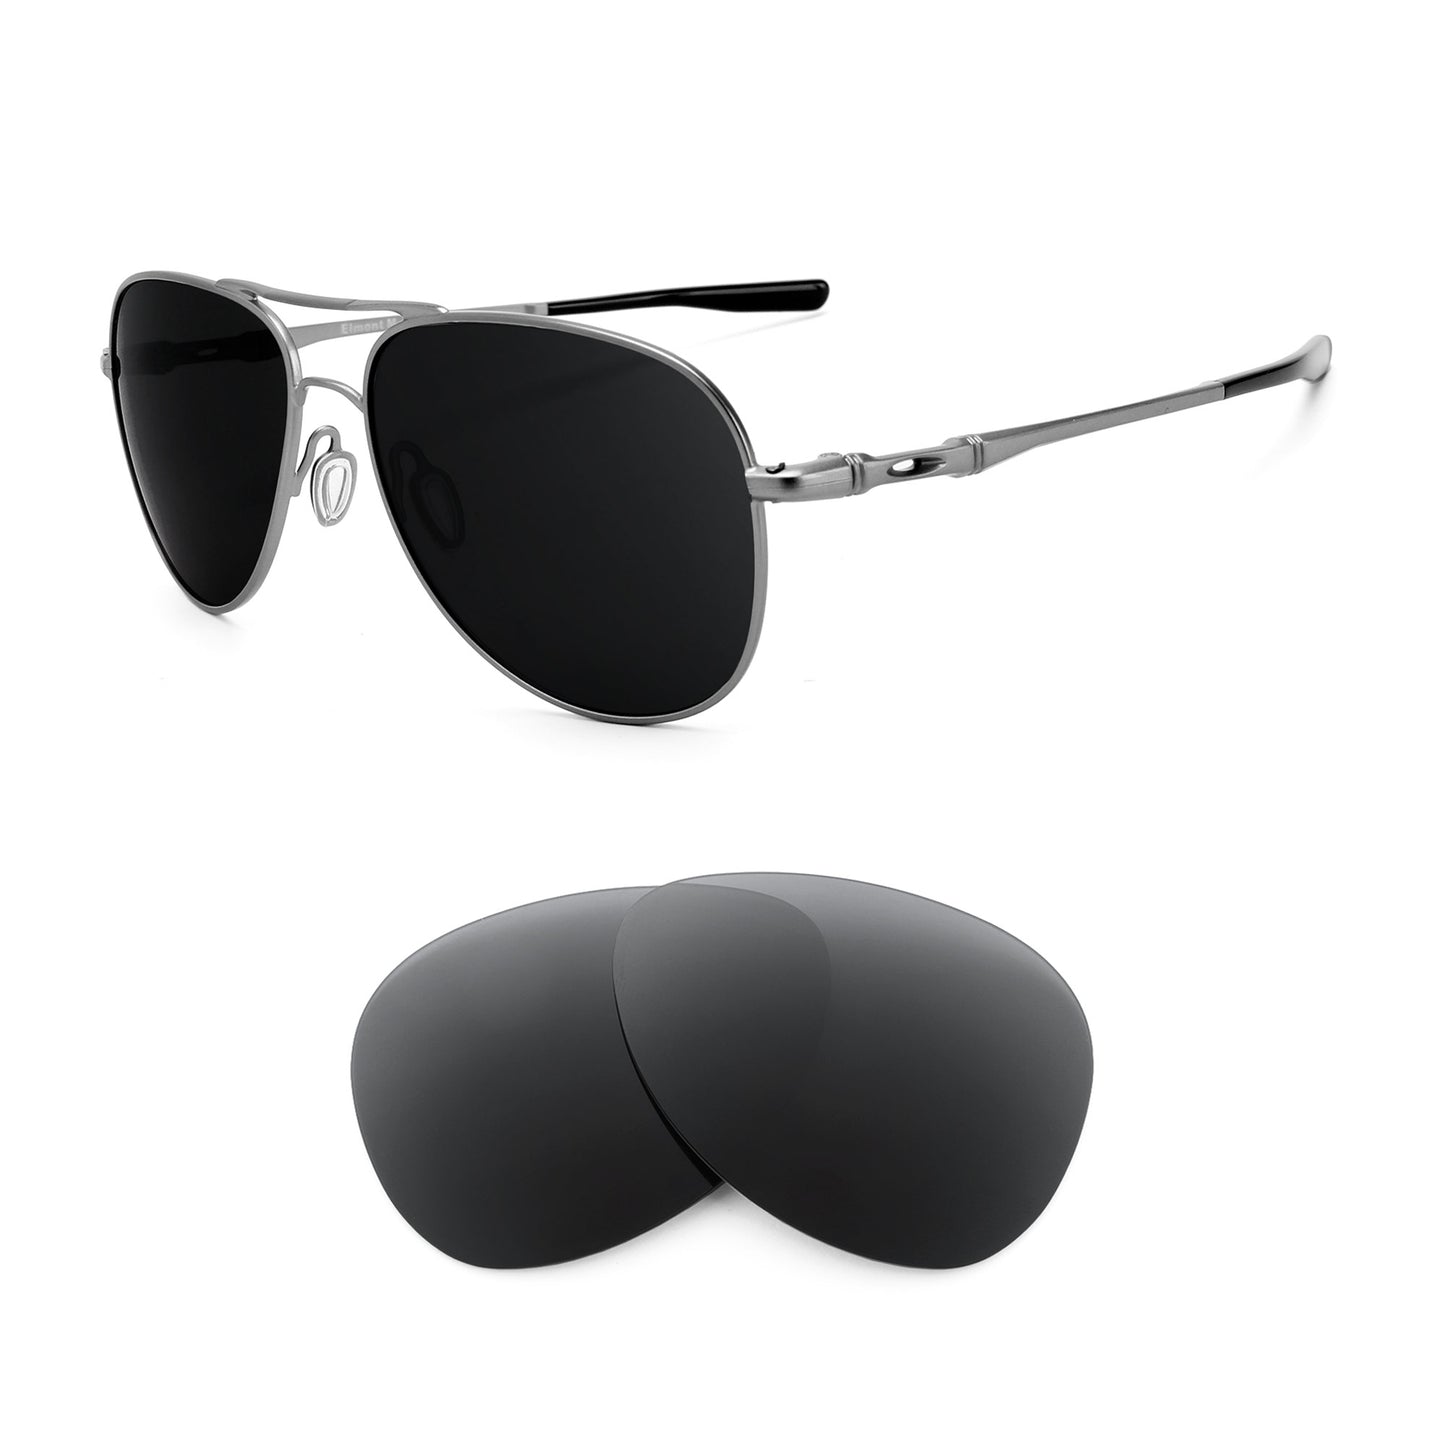 Oakley Elmont (Medium) sunglasses with replacement lenses